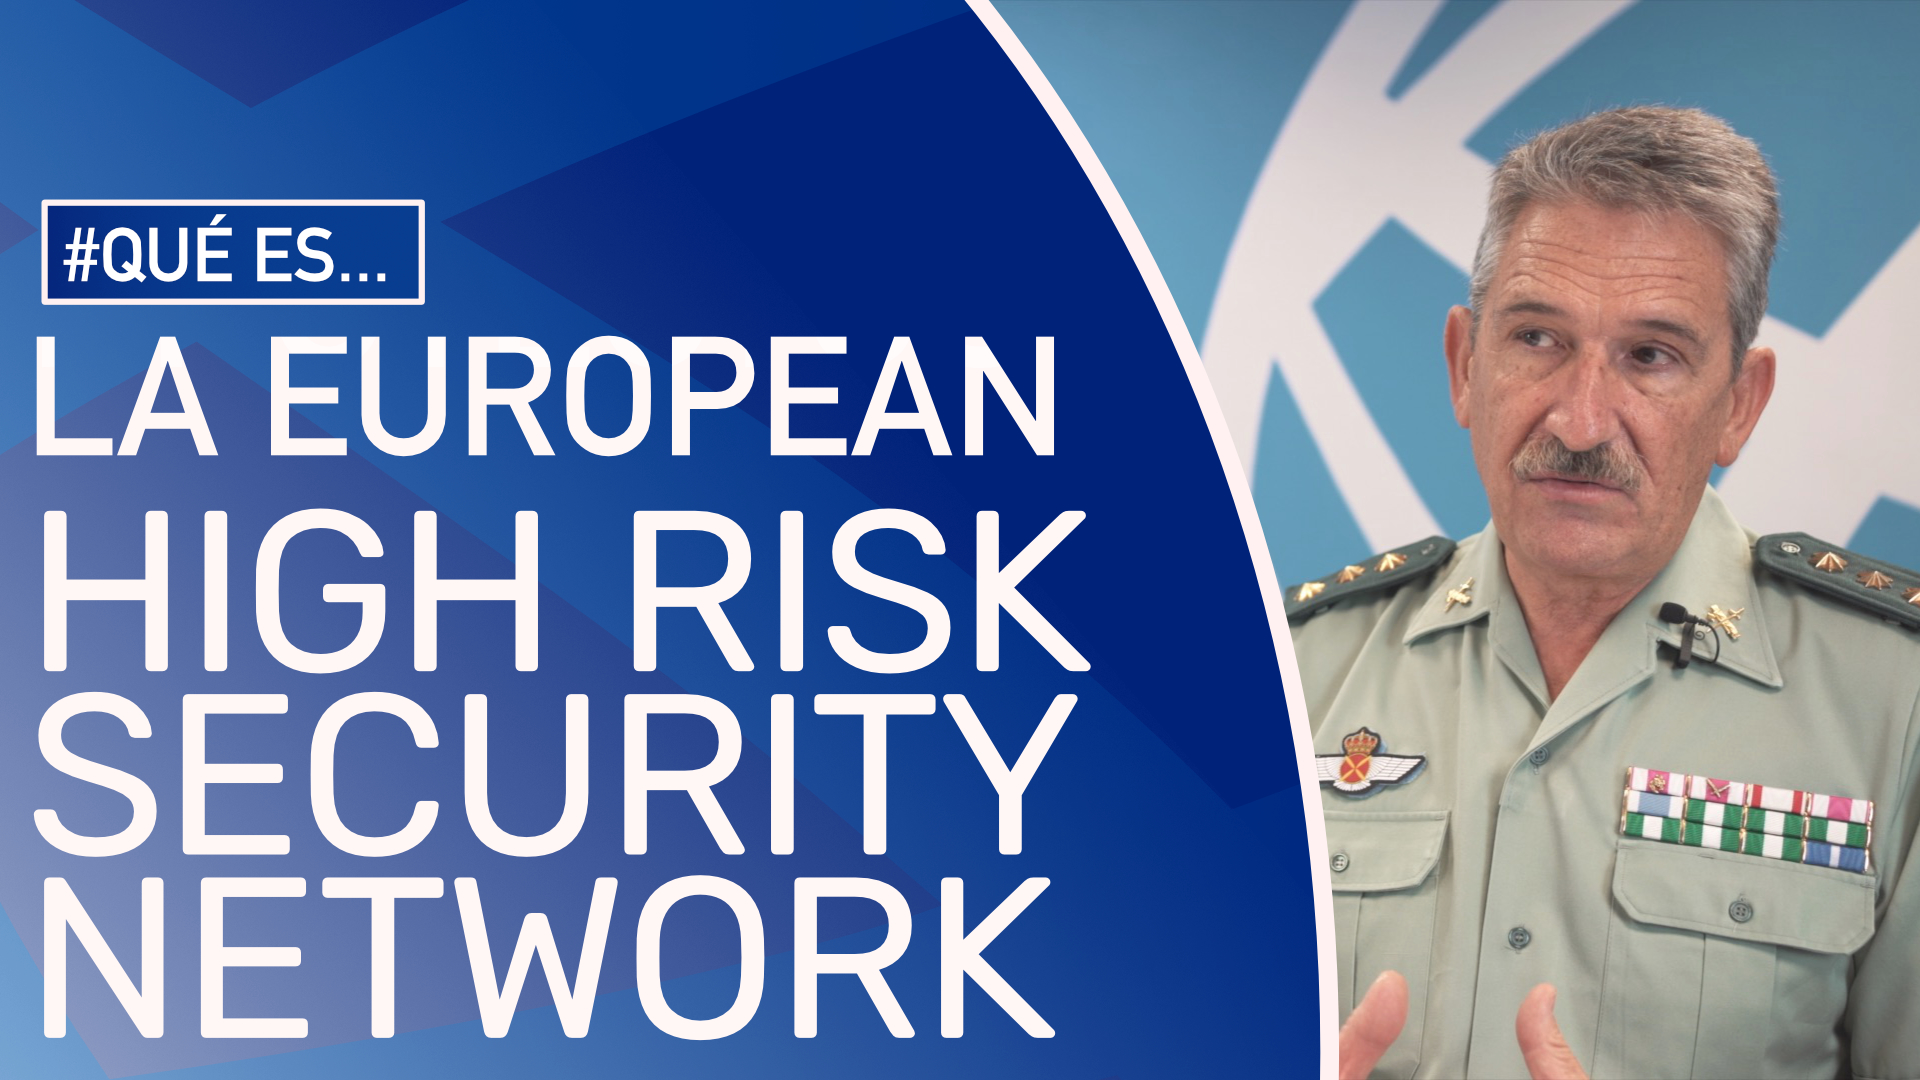 La European High Risk Security Network es un foro que reúne a expertos de distintas unidades con función antiterrorista de 17 países de Europa